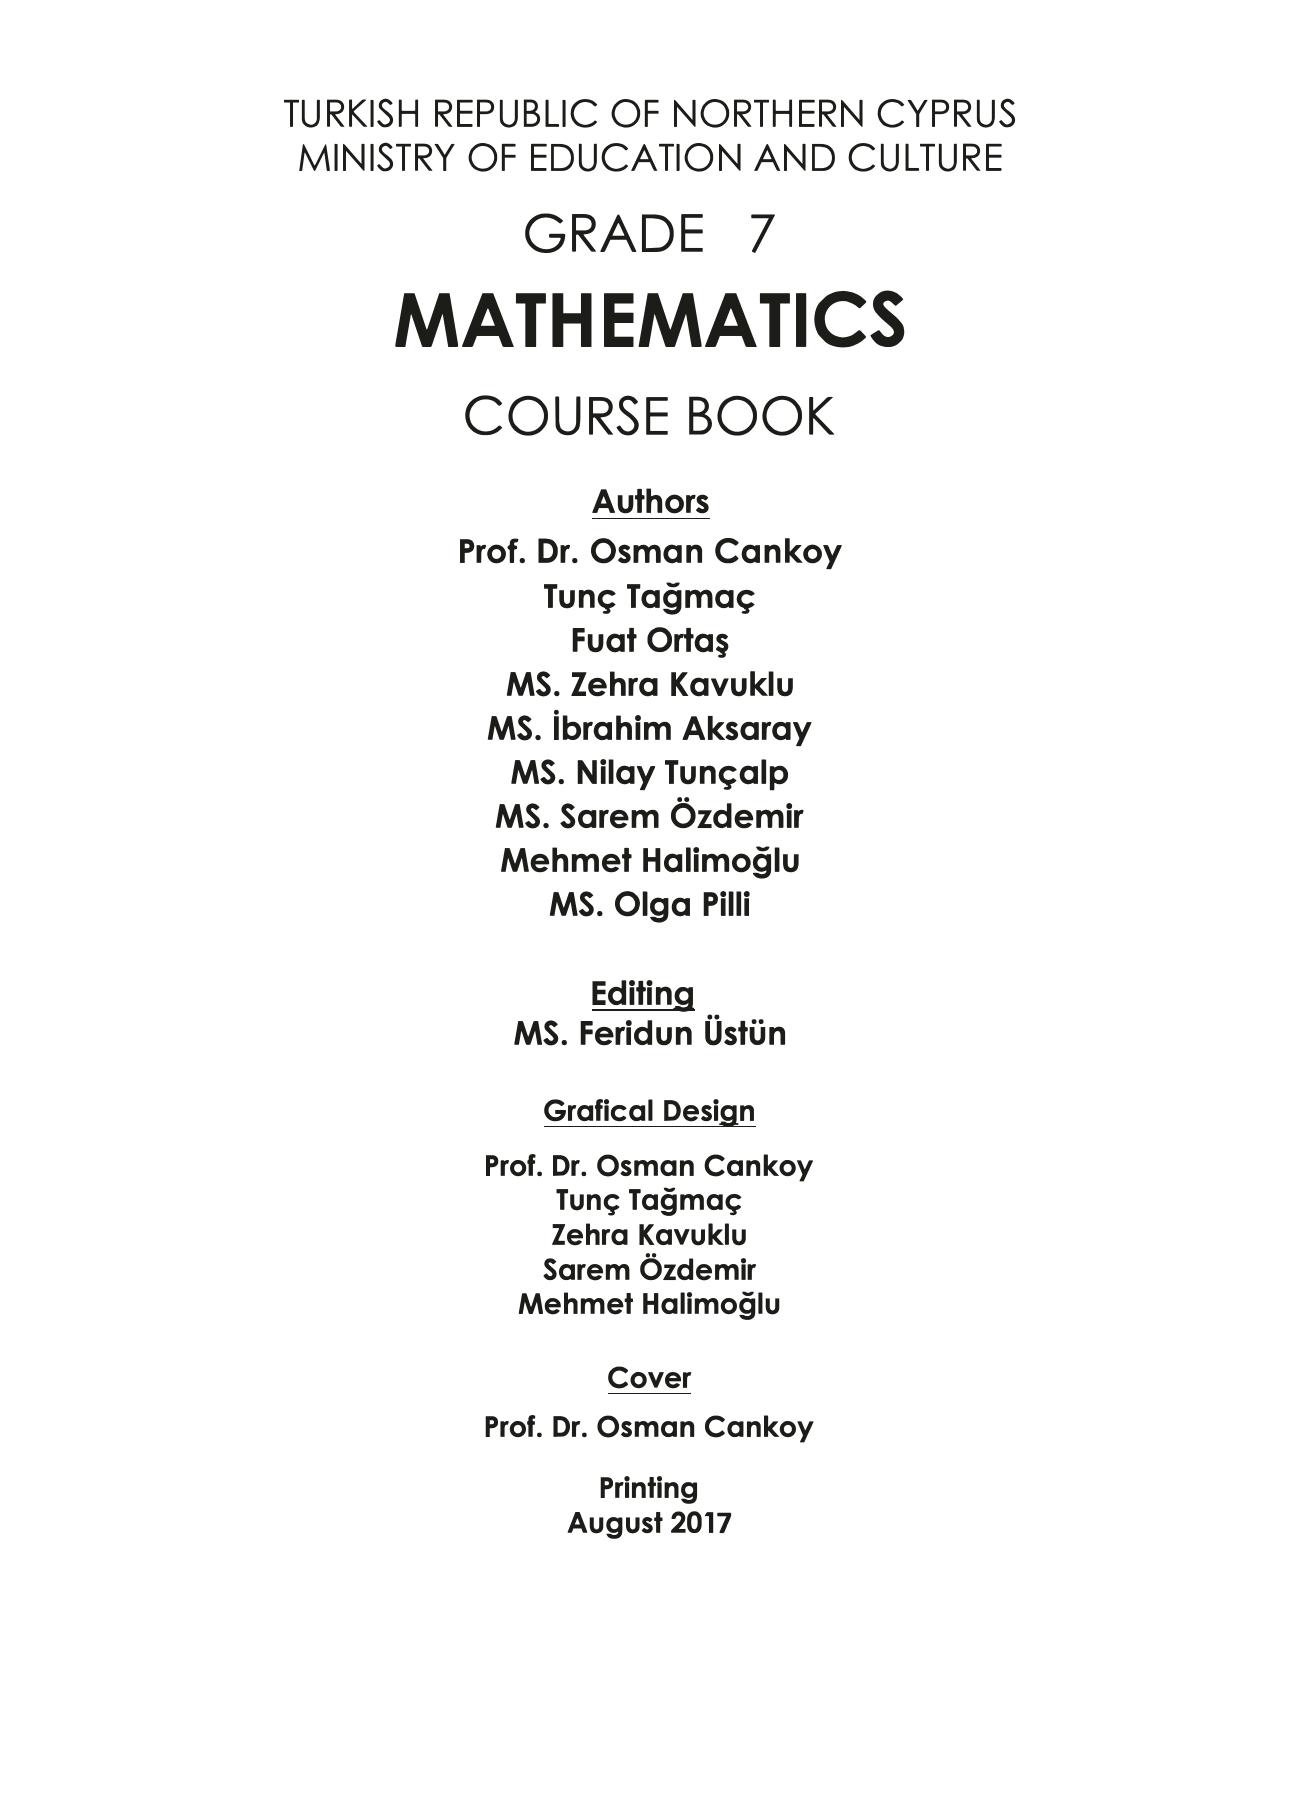 Mathematics. Grade 7. Course Book by coll